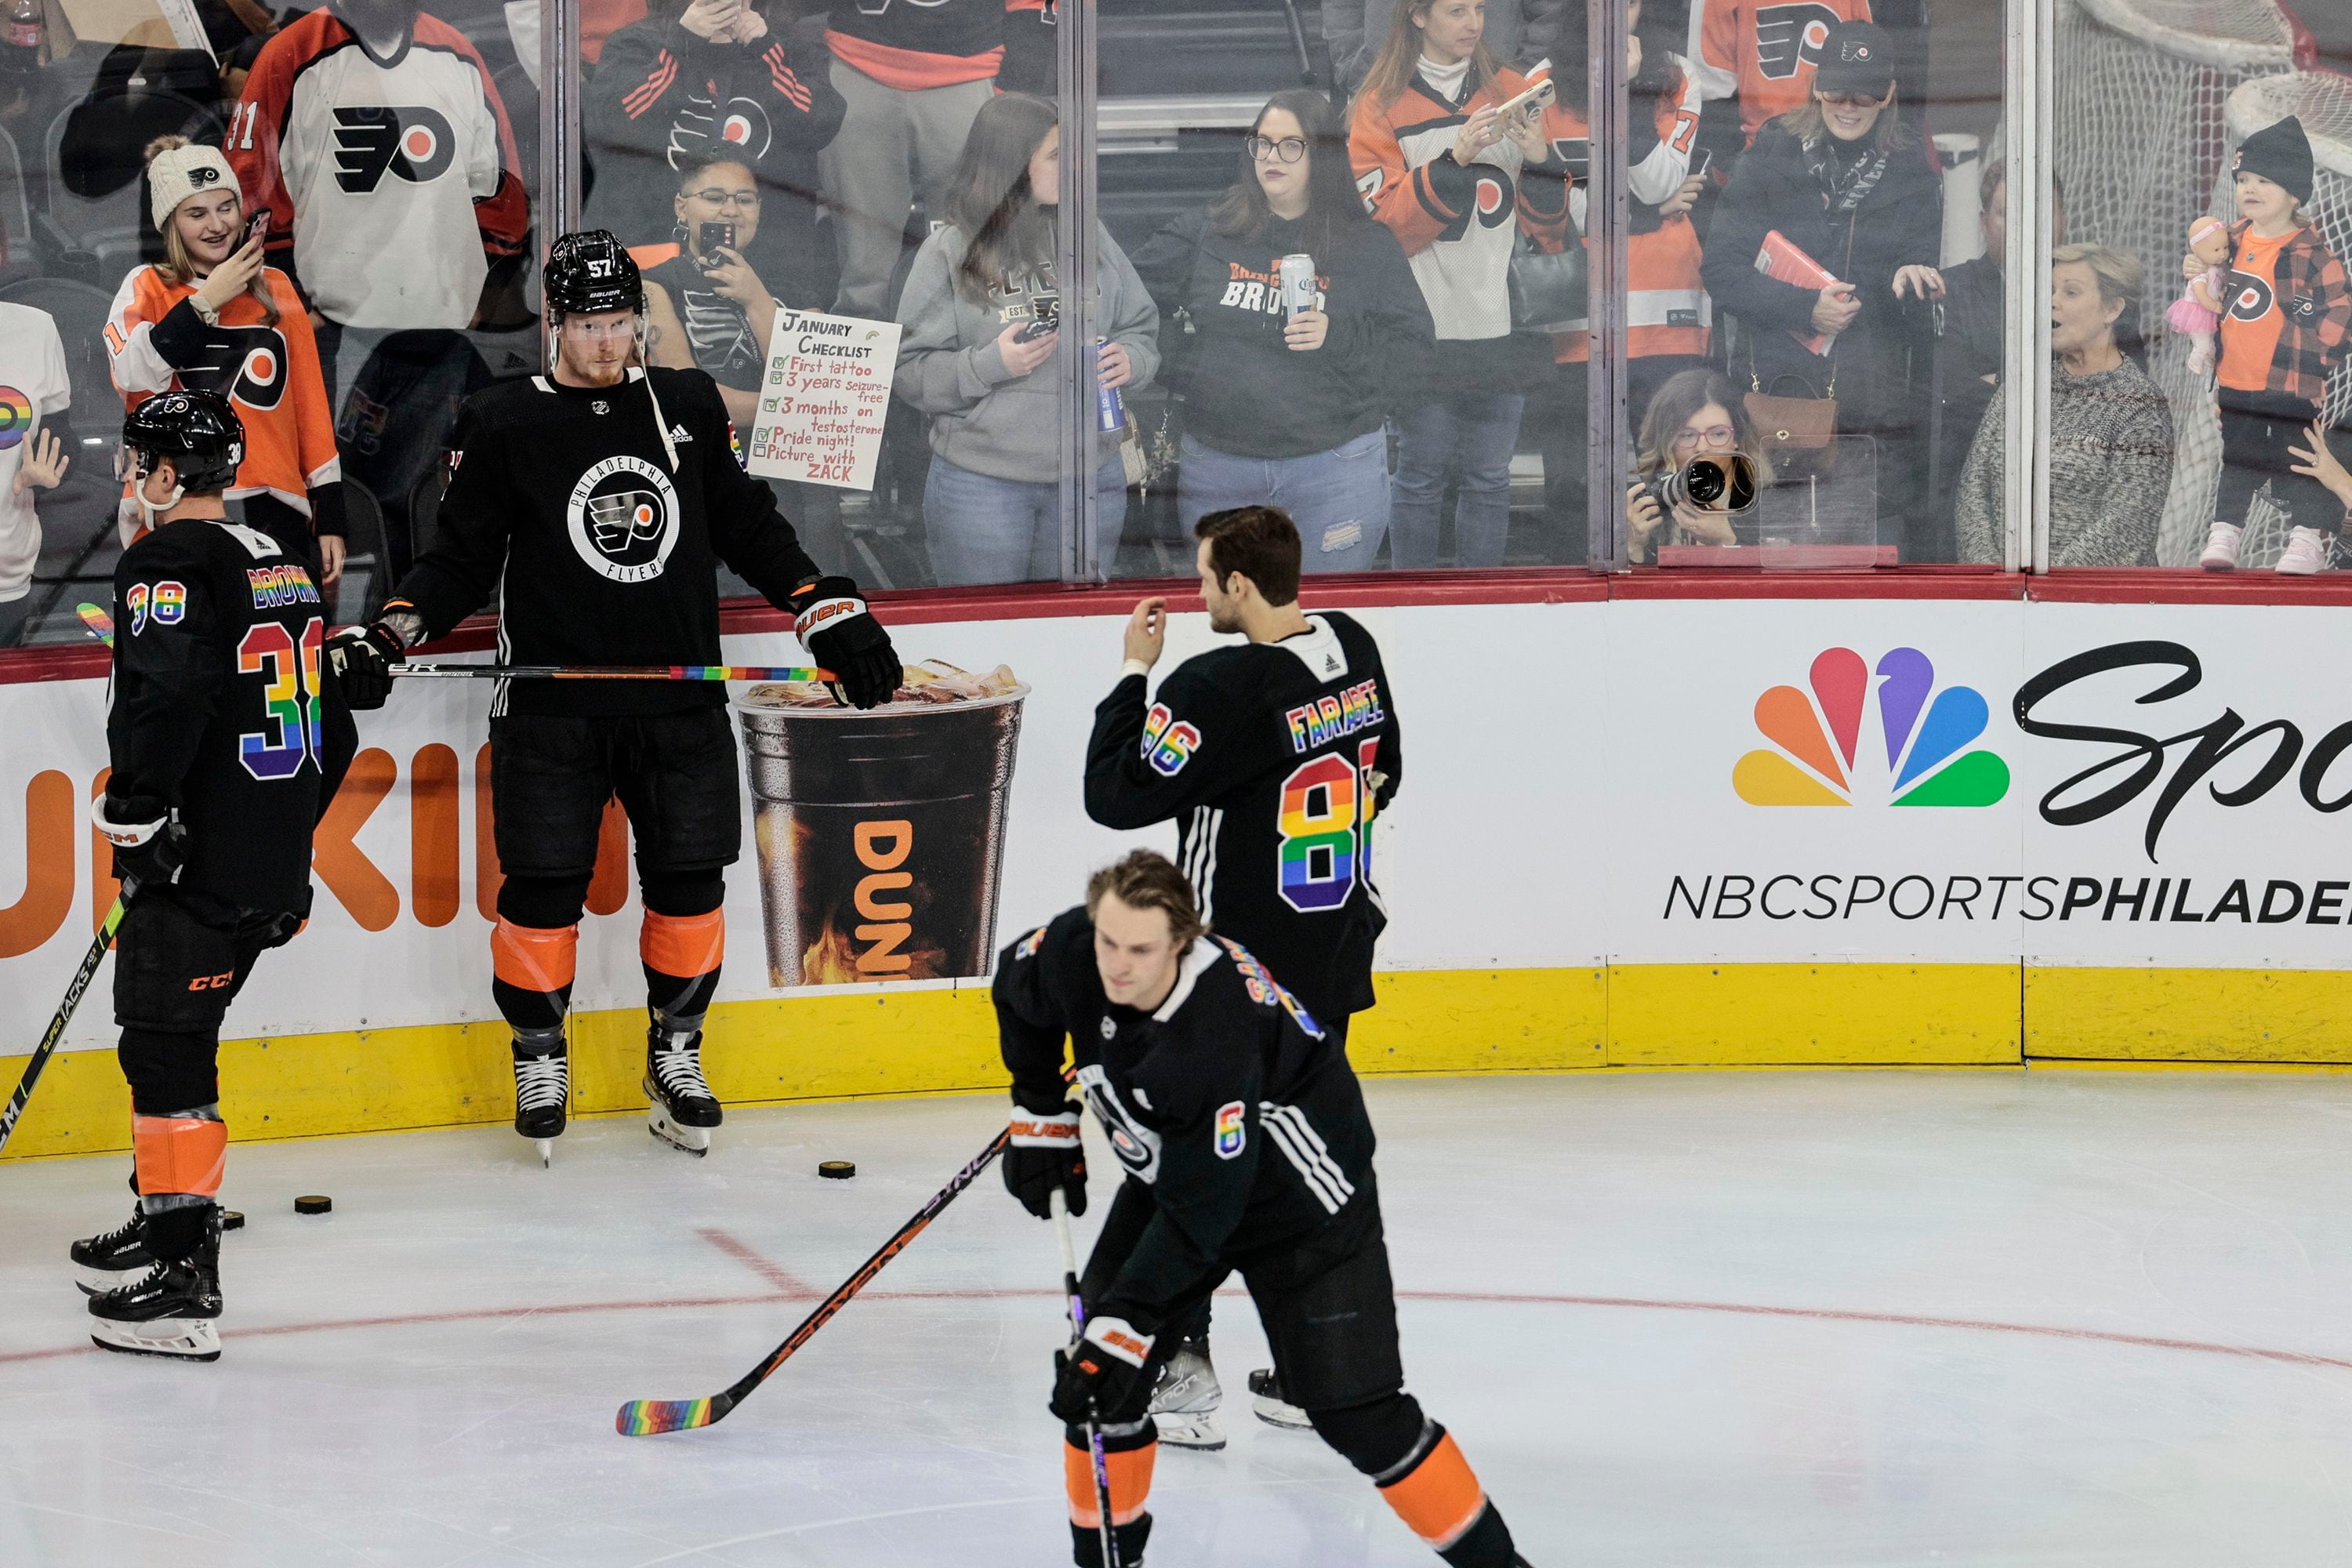 Pride Night: A Woke Game Christian NHL Players Won't Play